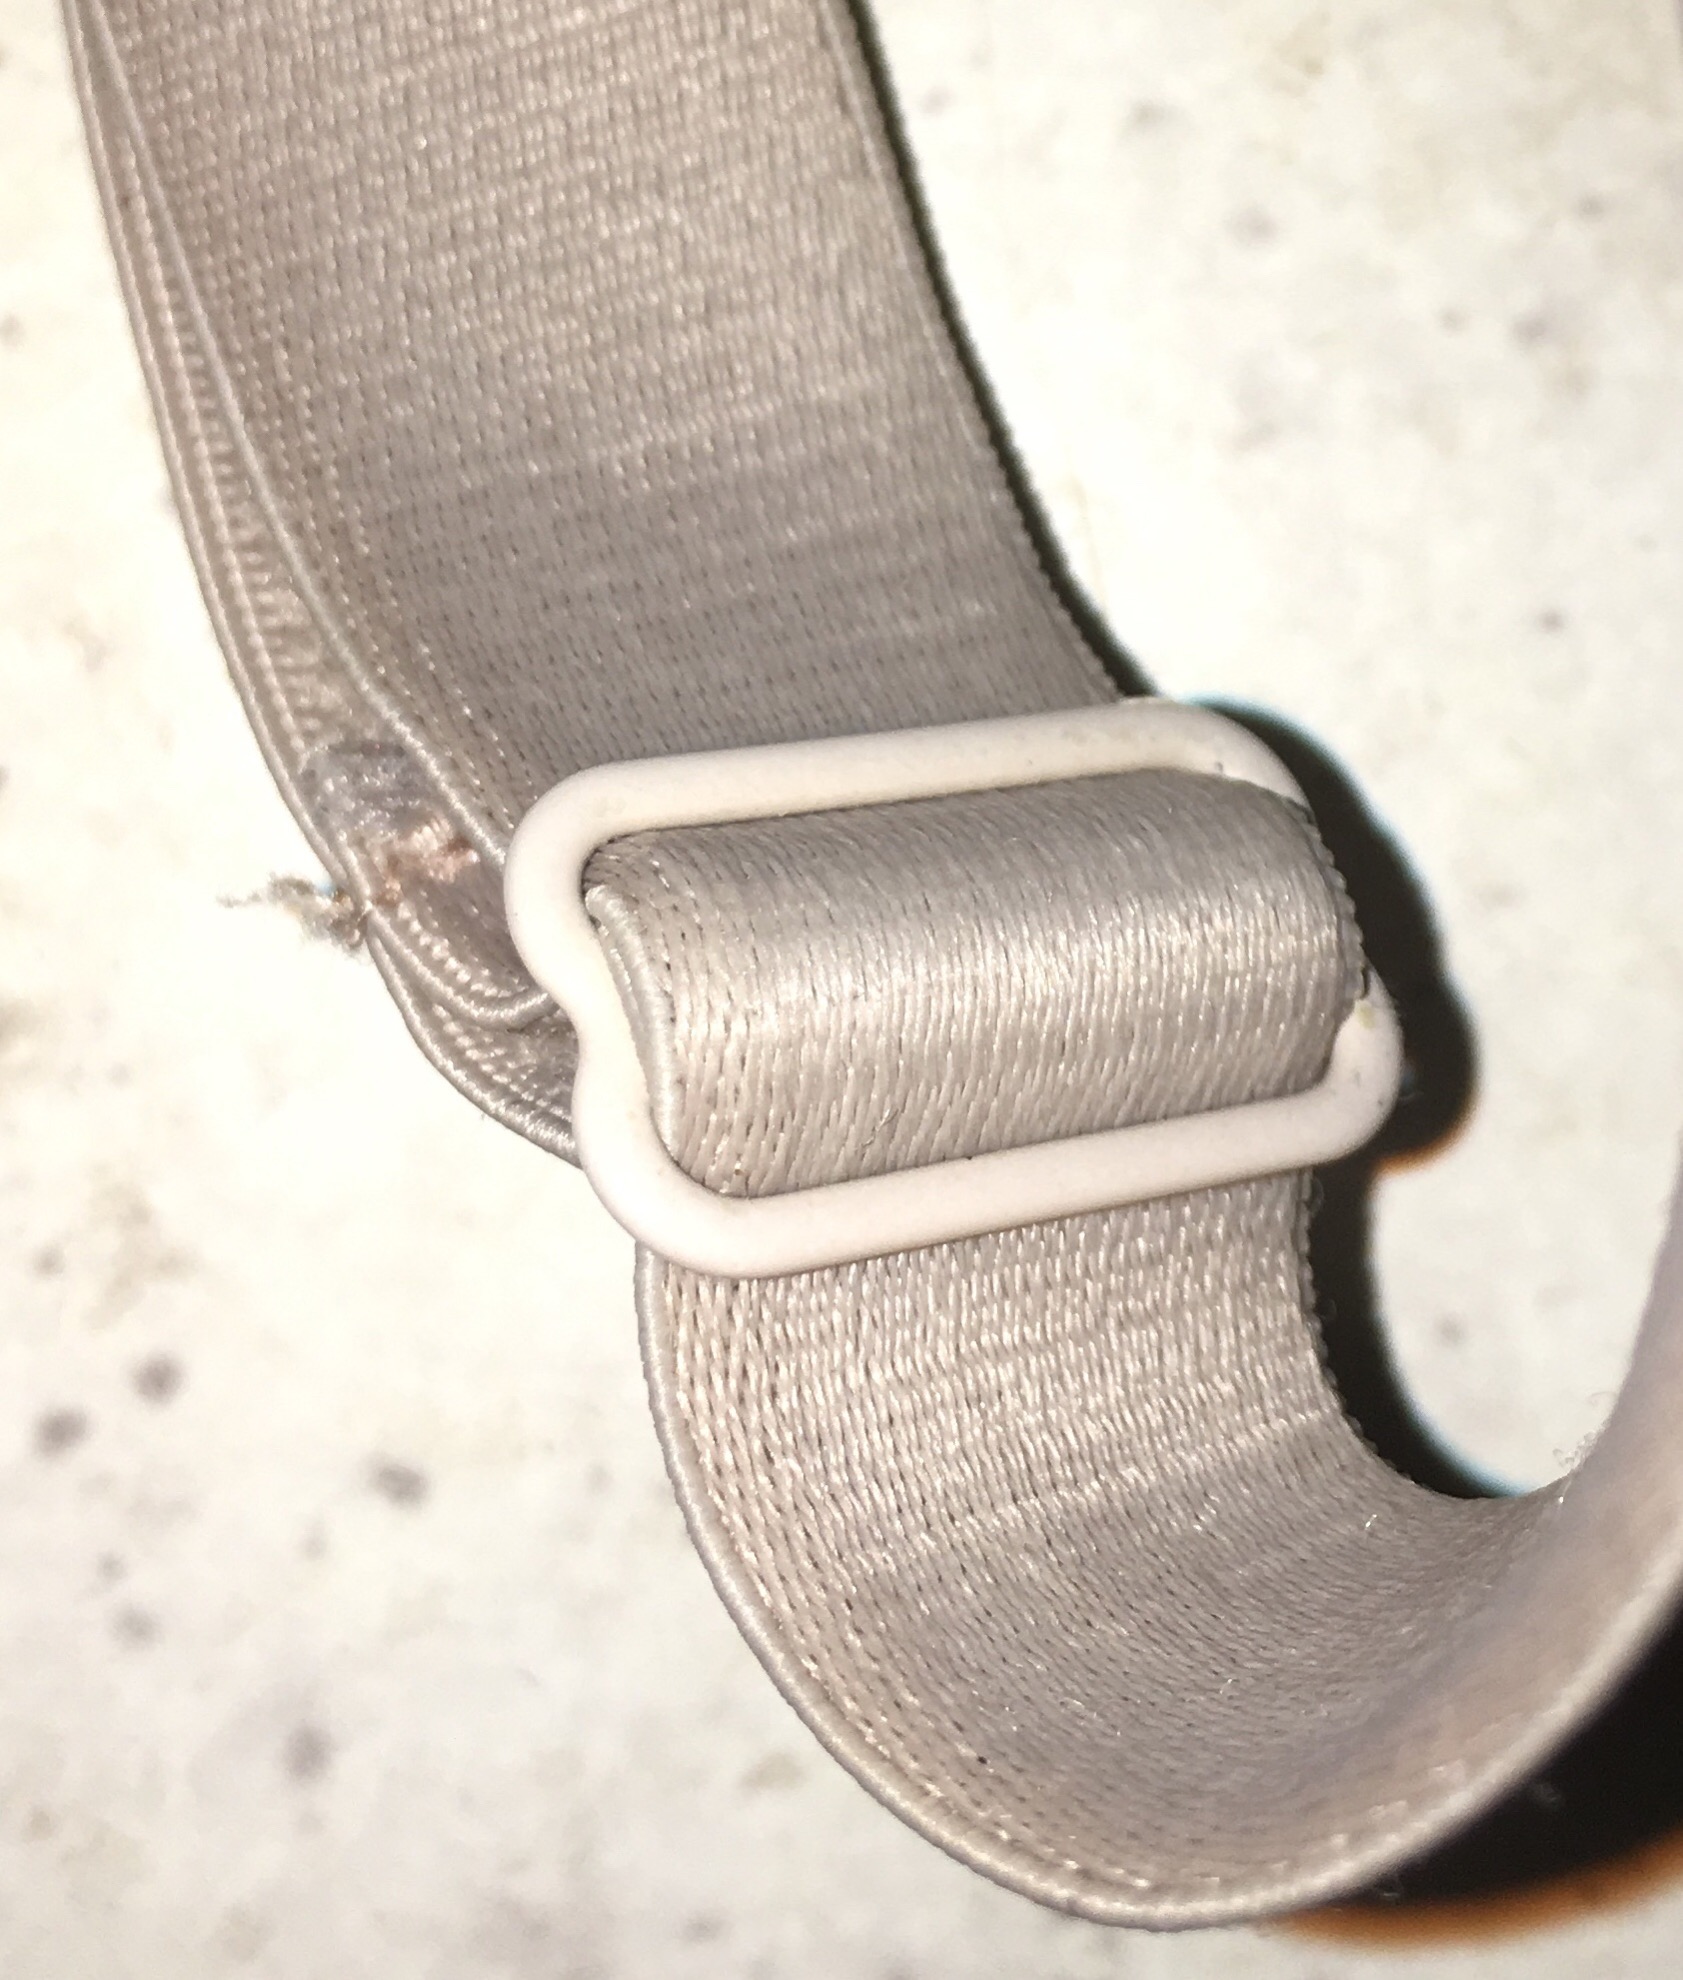 File:Small bra strap with metal tri-glide slide.jpg - Wikimedia